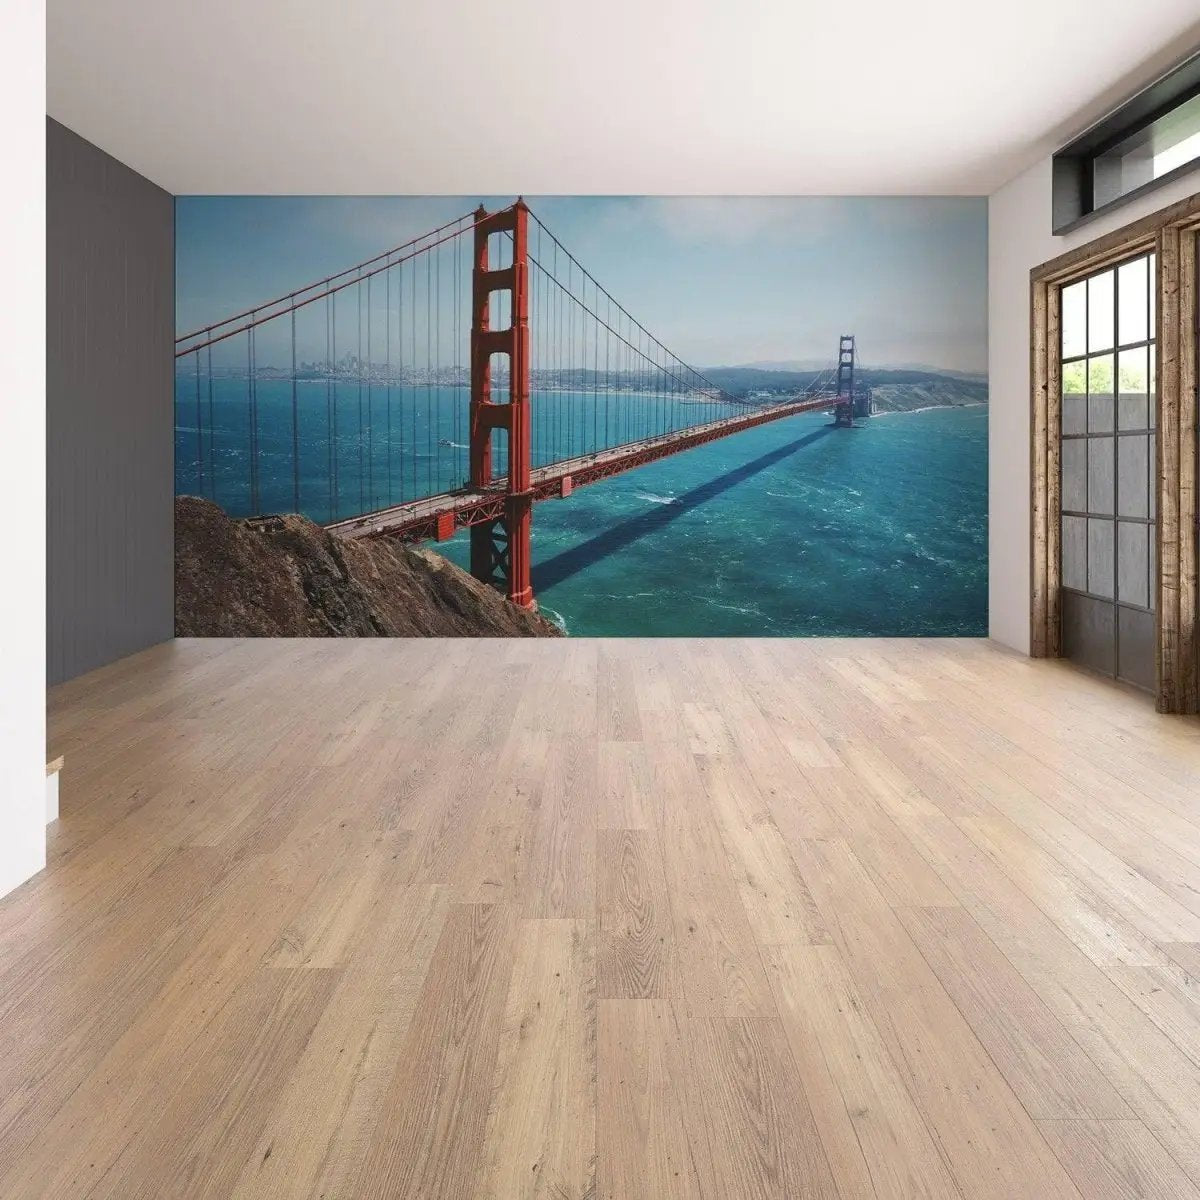 Golden Gate Bridge Vinyl Wall Decal - San Francisco Skyline Wall Art - Decords